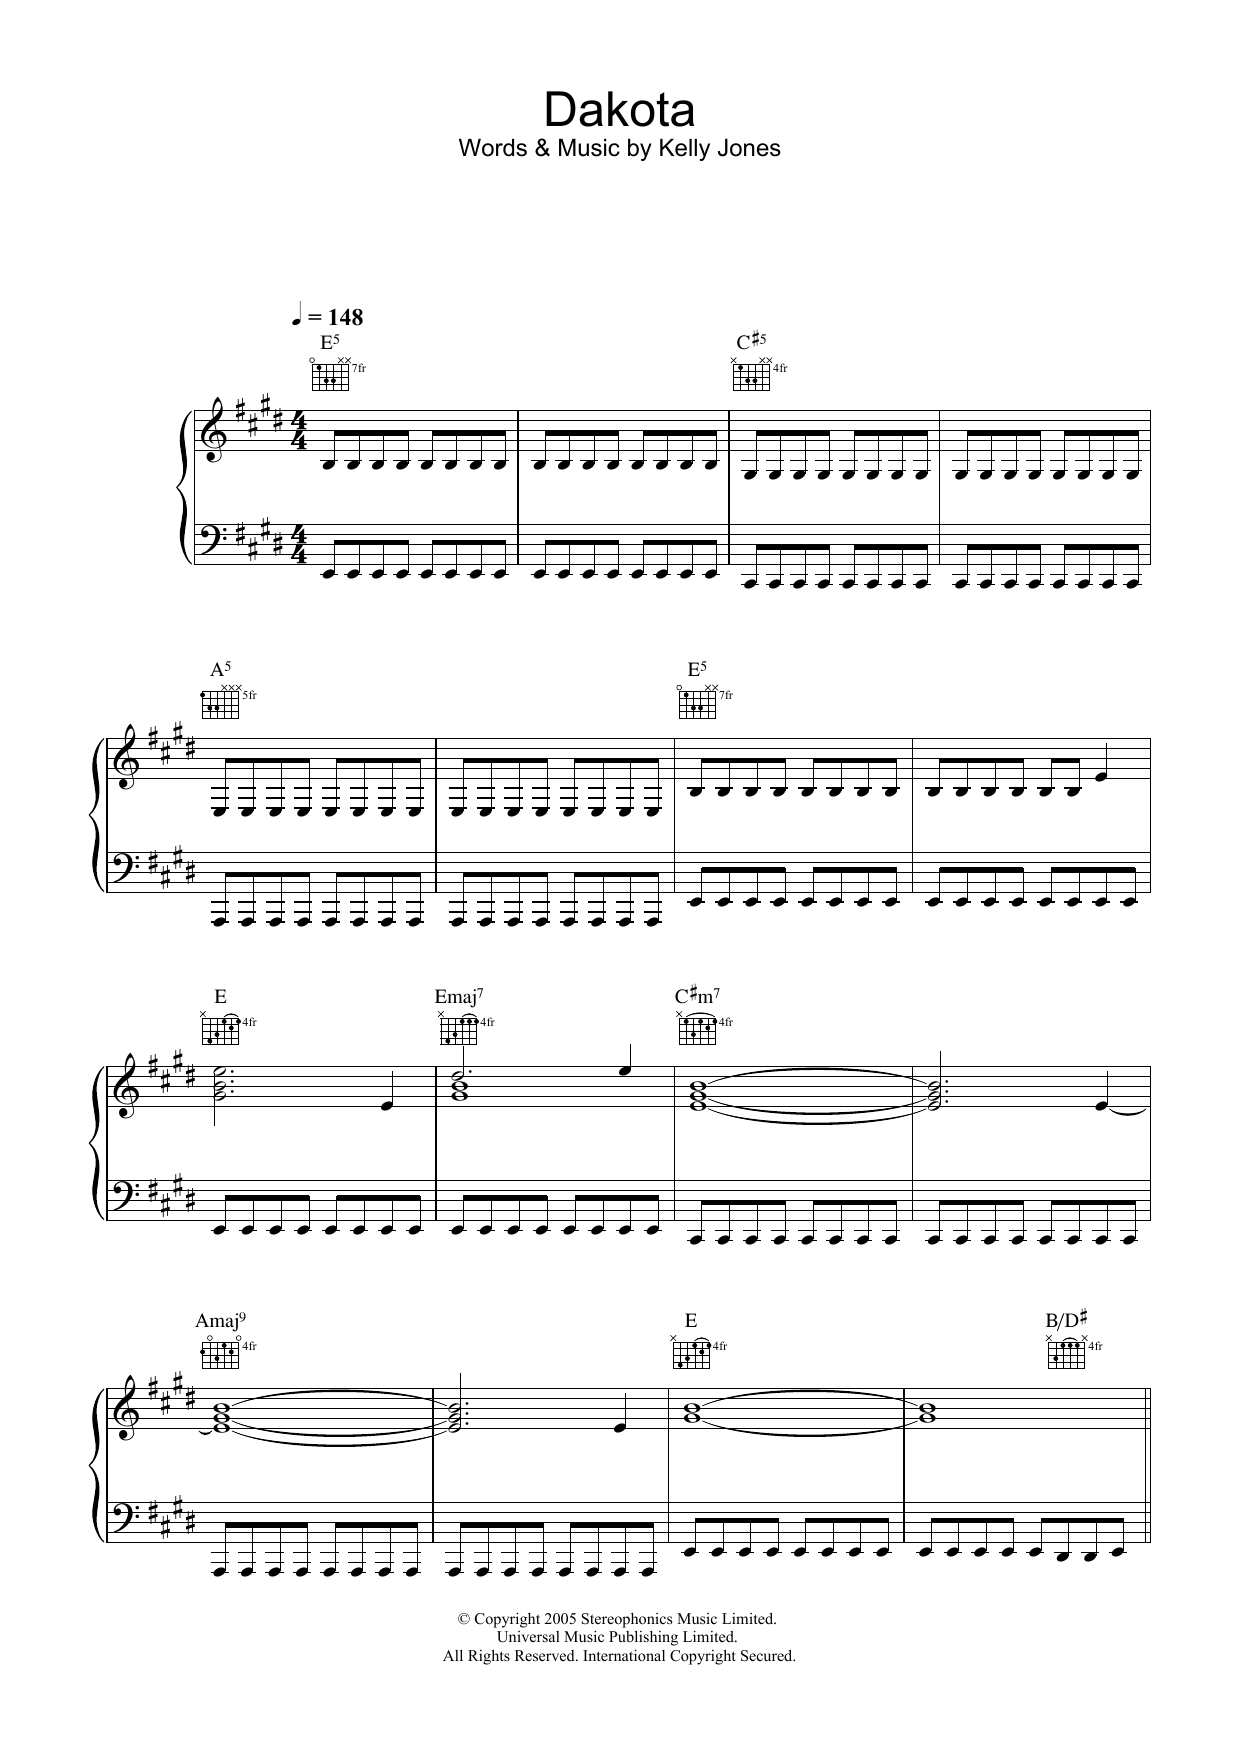 Stereophonics Dakota Sheet Music Notes & Chords for Melody Line, Lyrics & Chords - Download or Print PDF